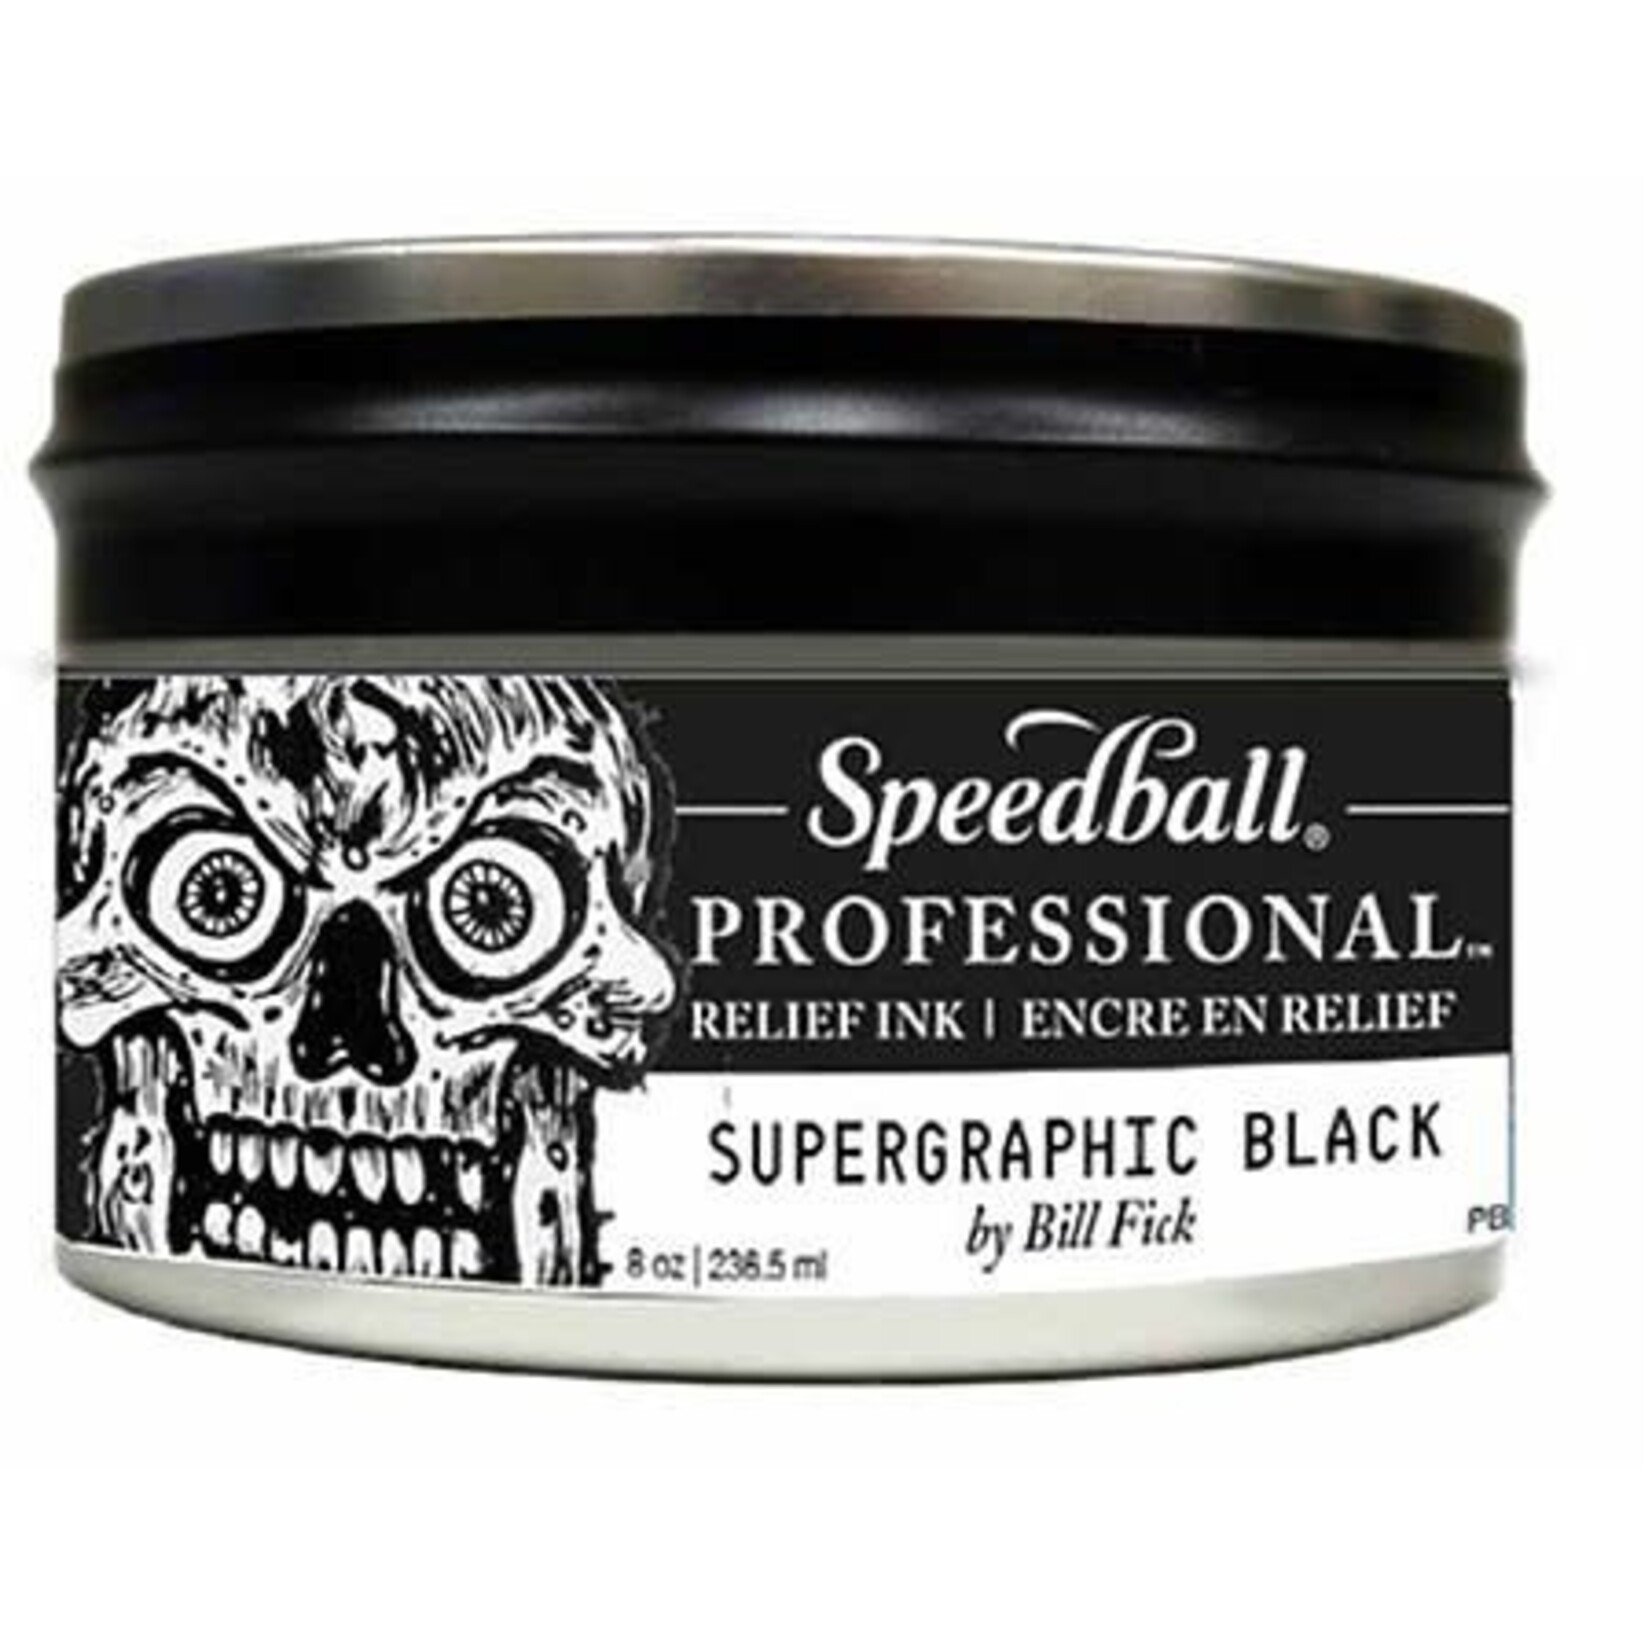 Speedball 8Oz Professional Relief Ink Supergraphic Black